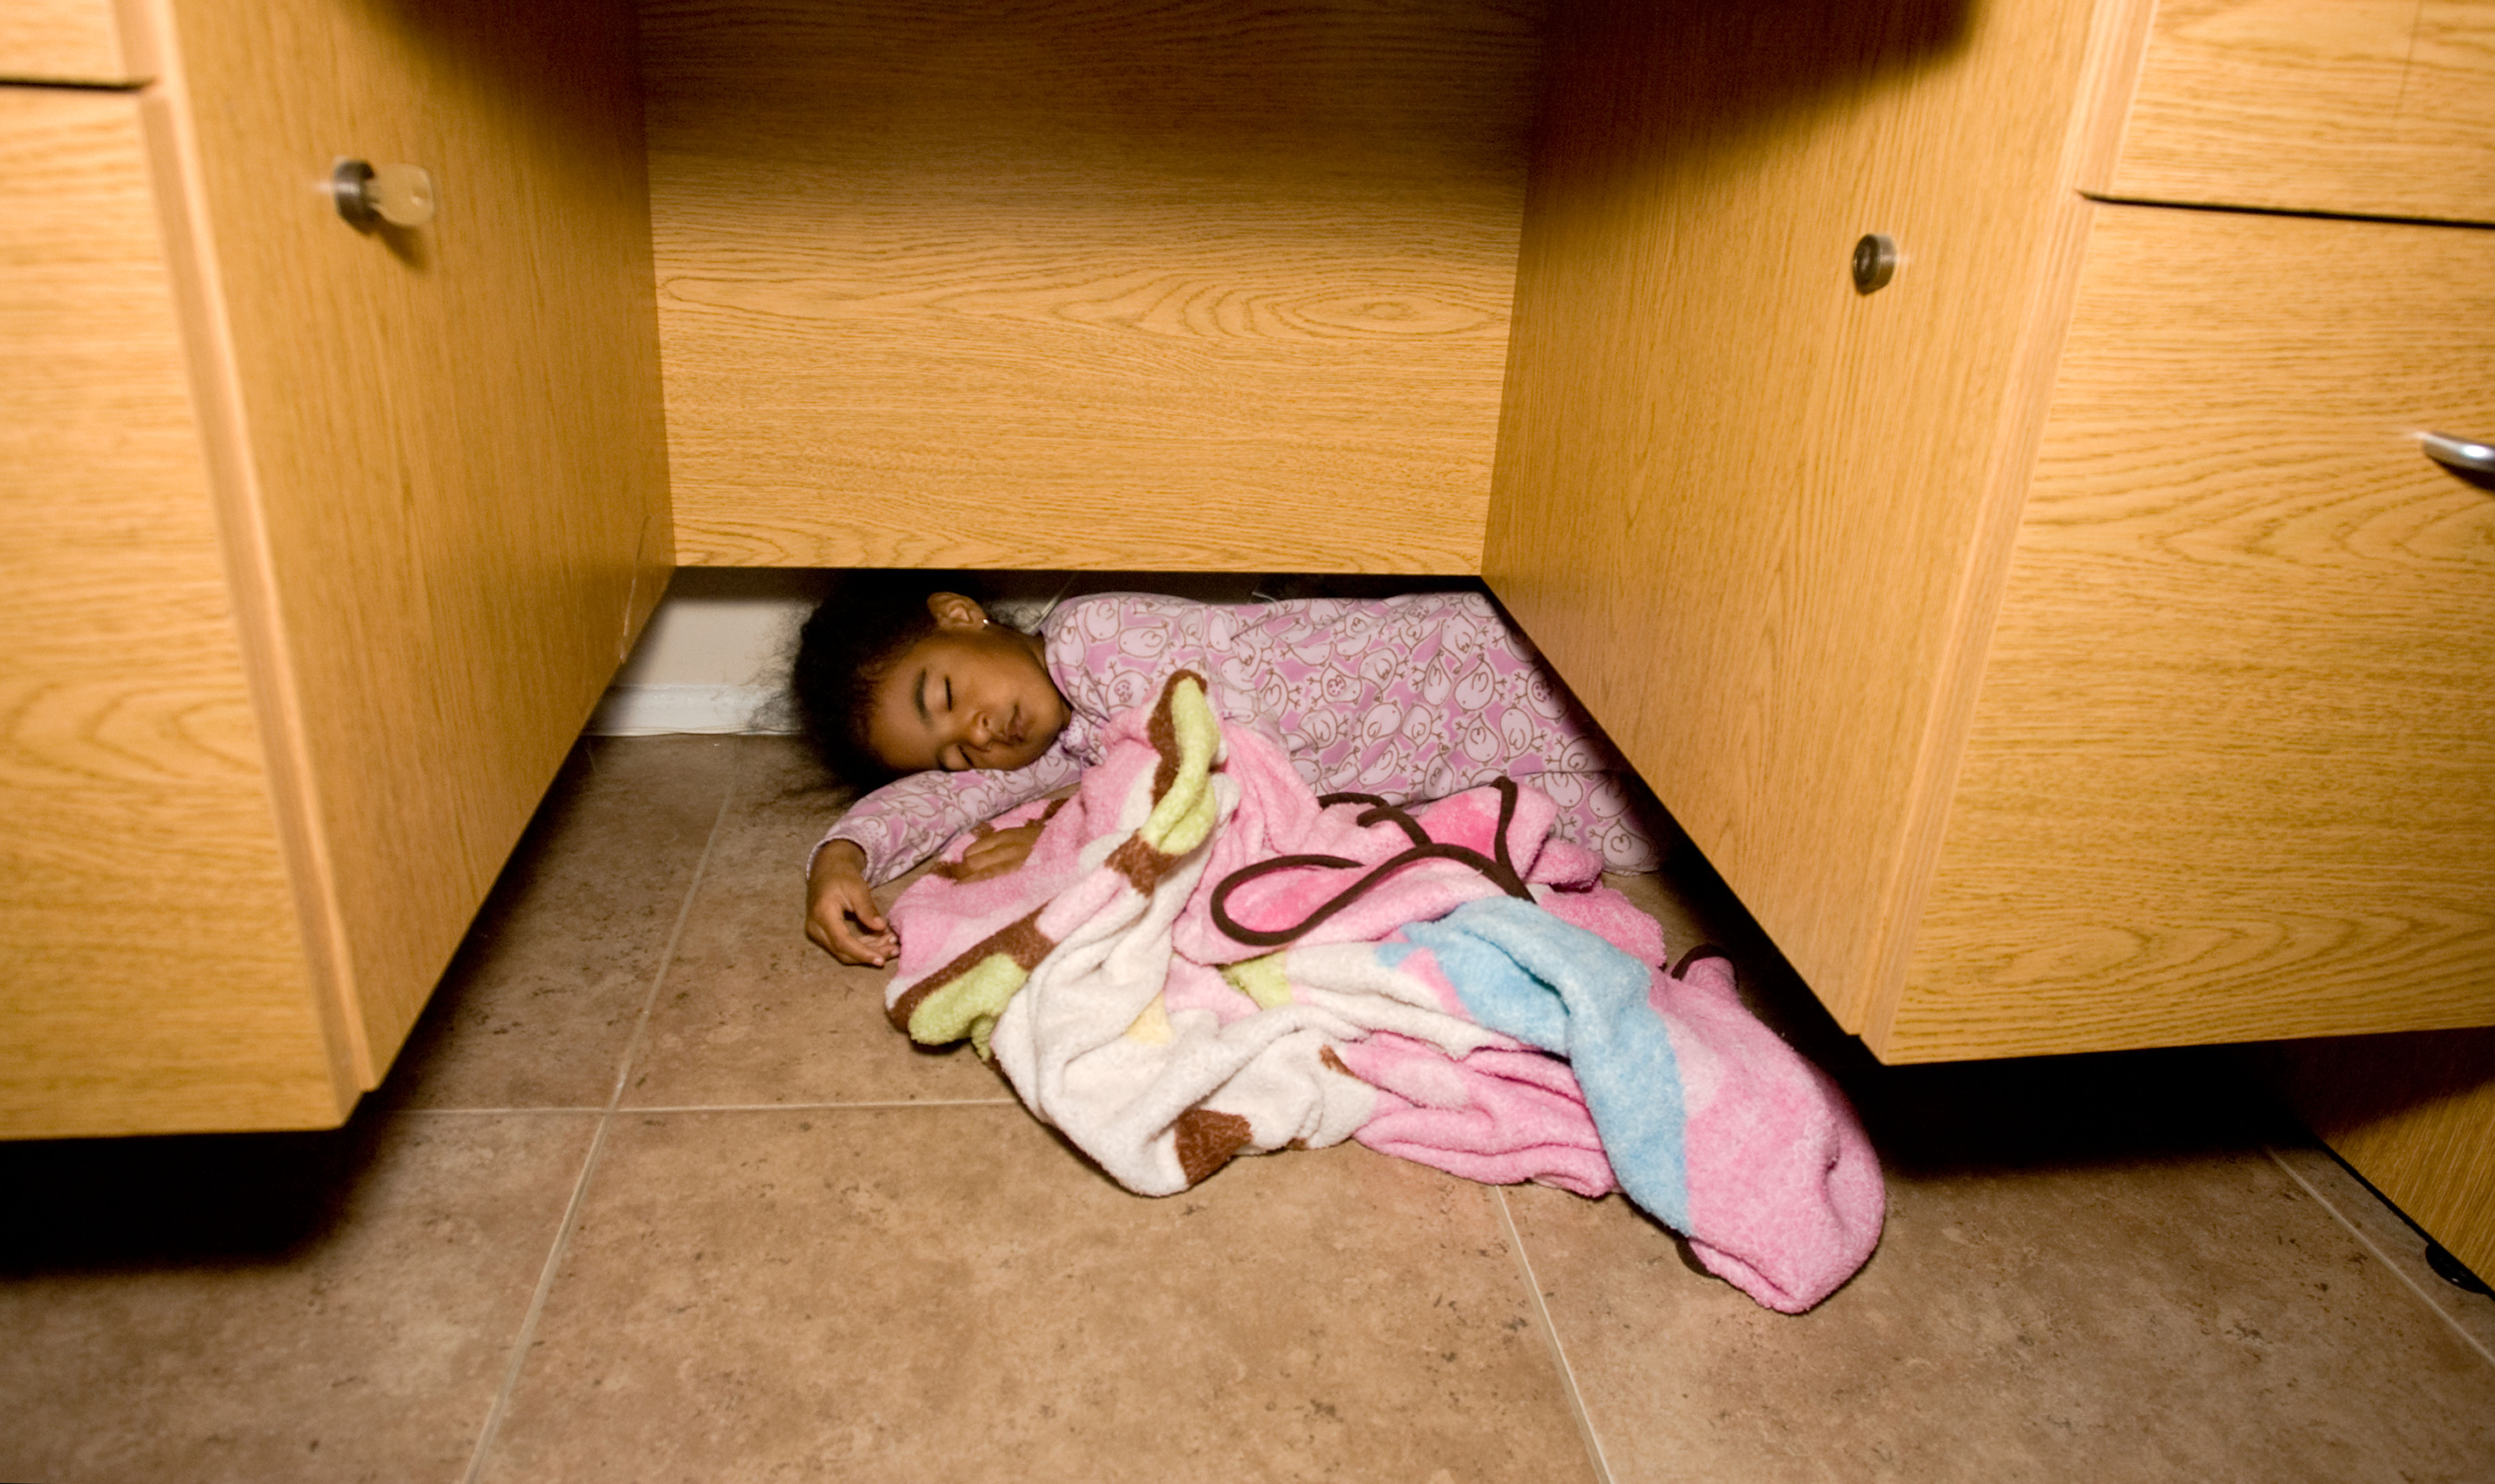 Child sleeping on the floor under a desk